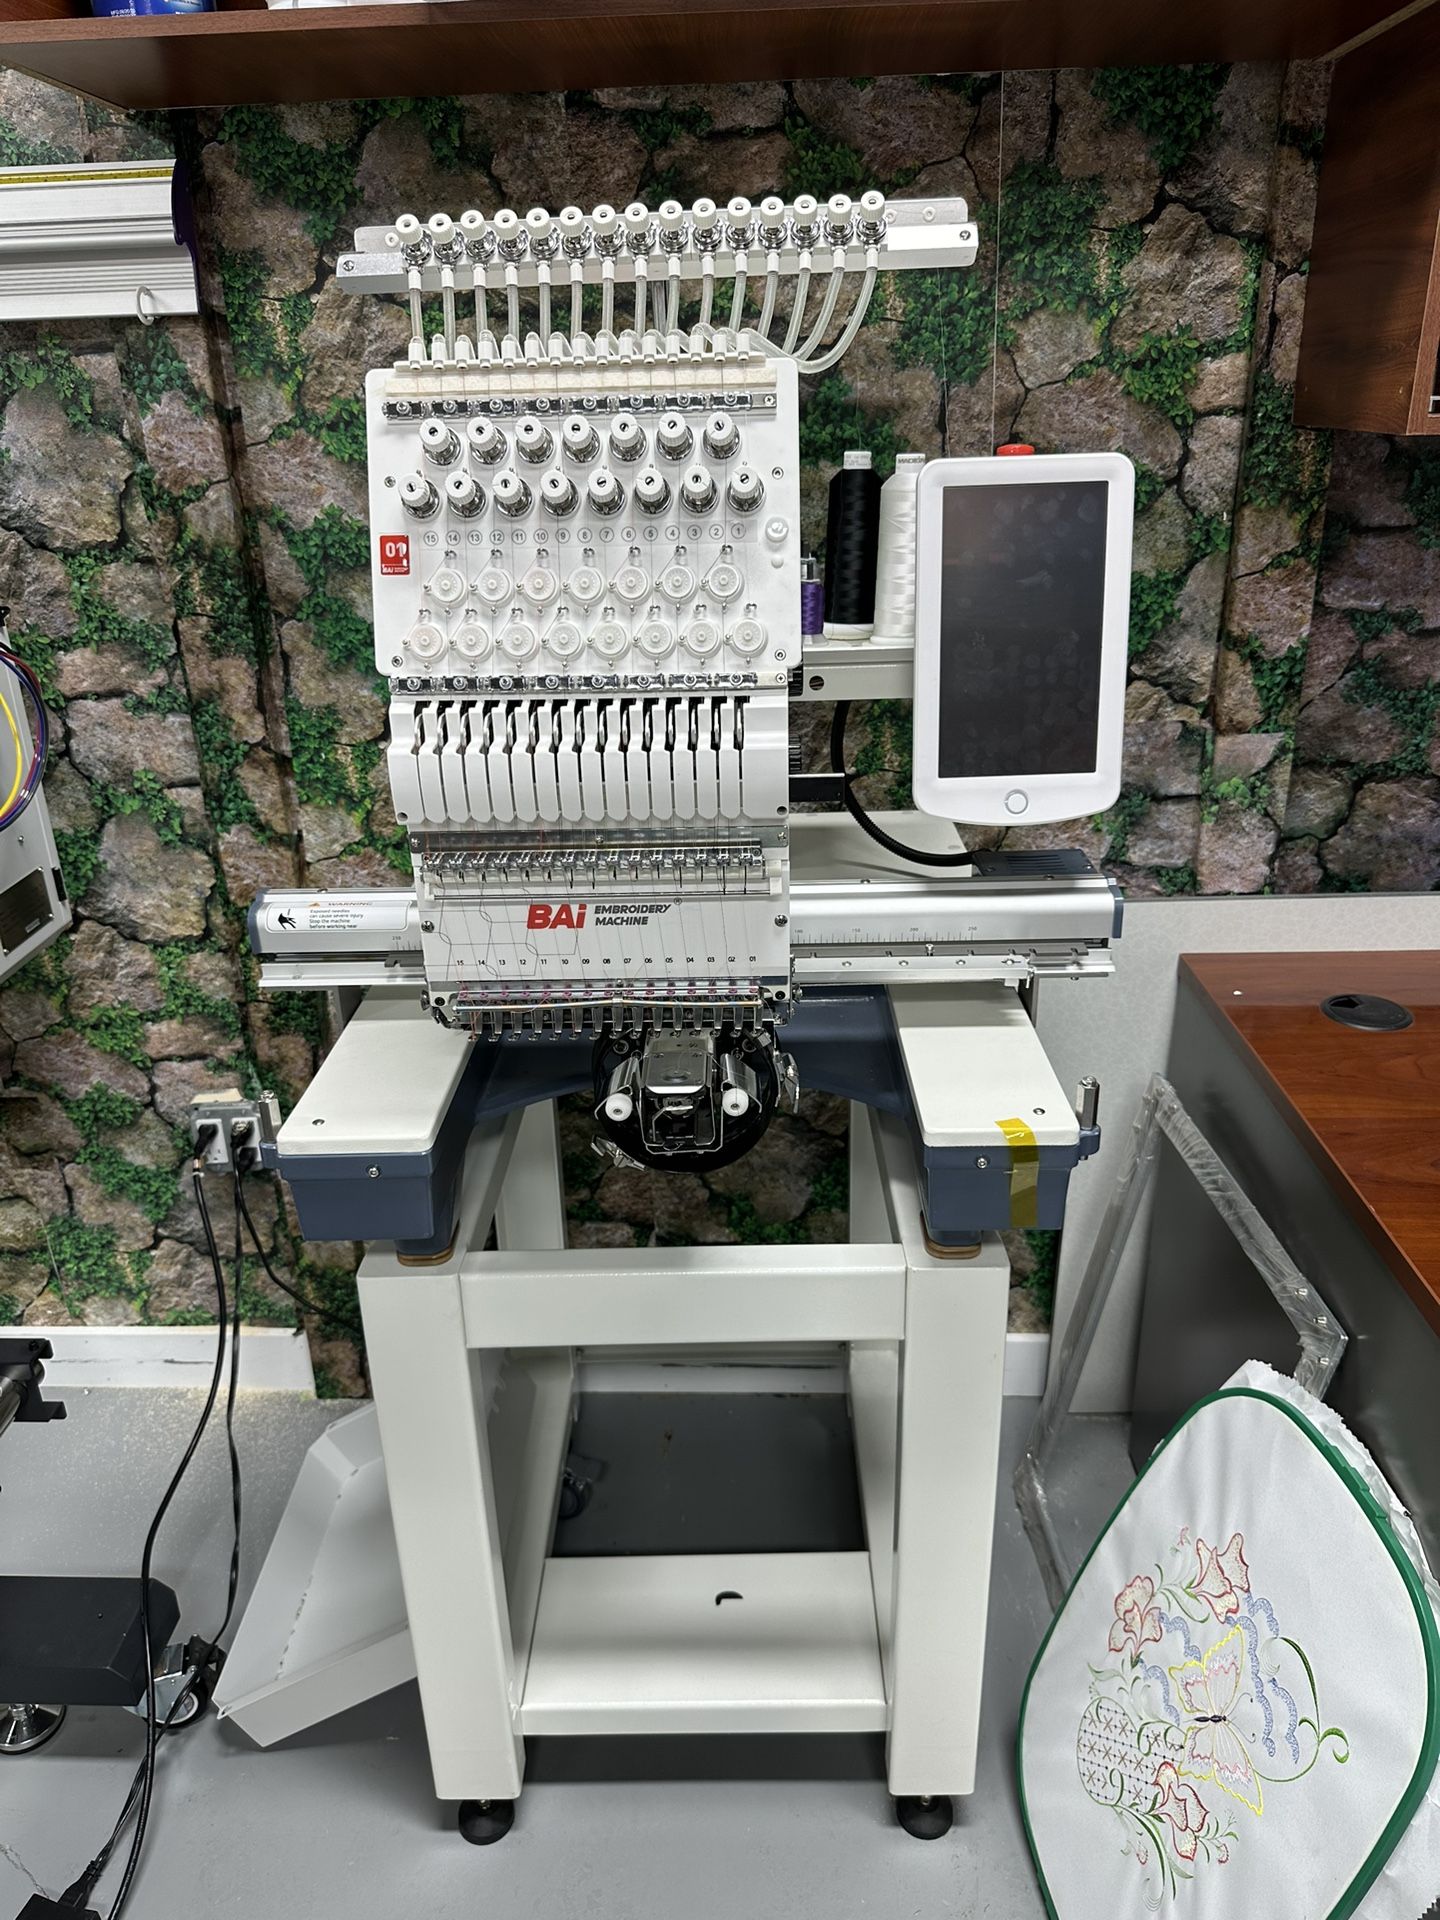 BAI Embroidery Machine